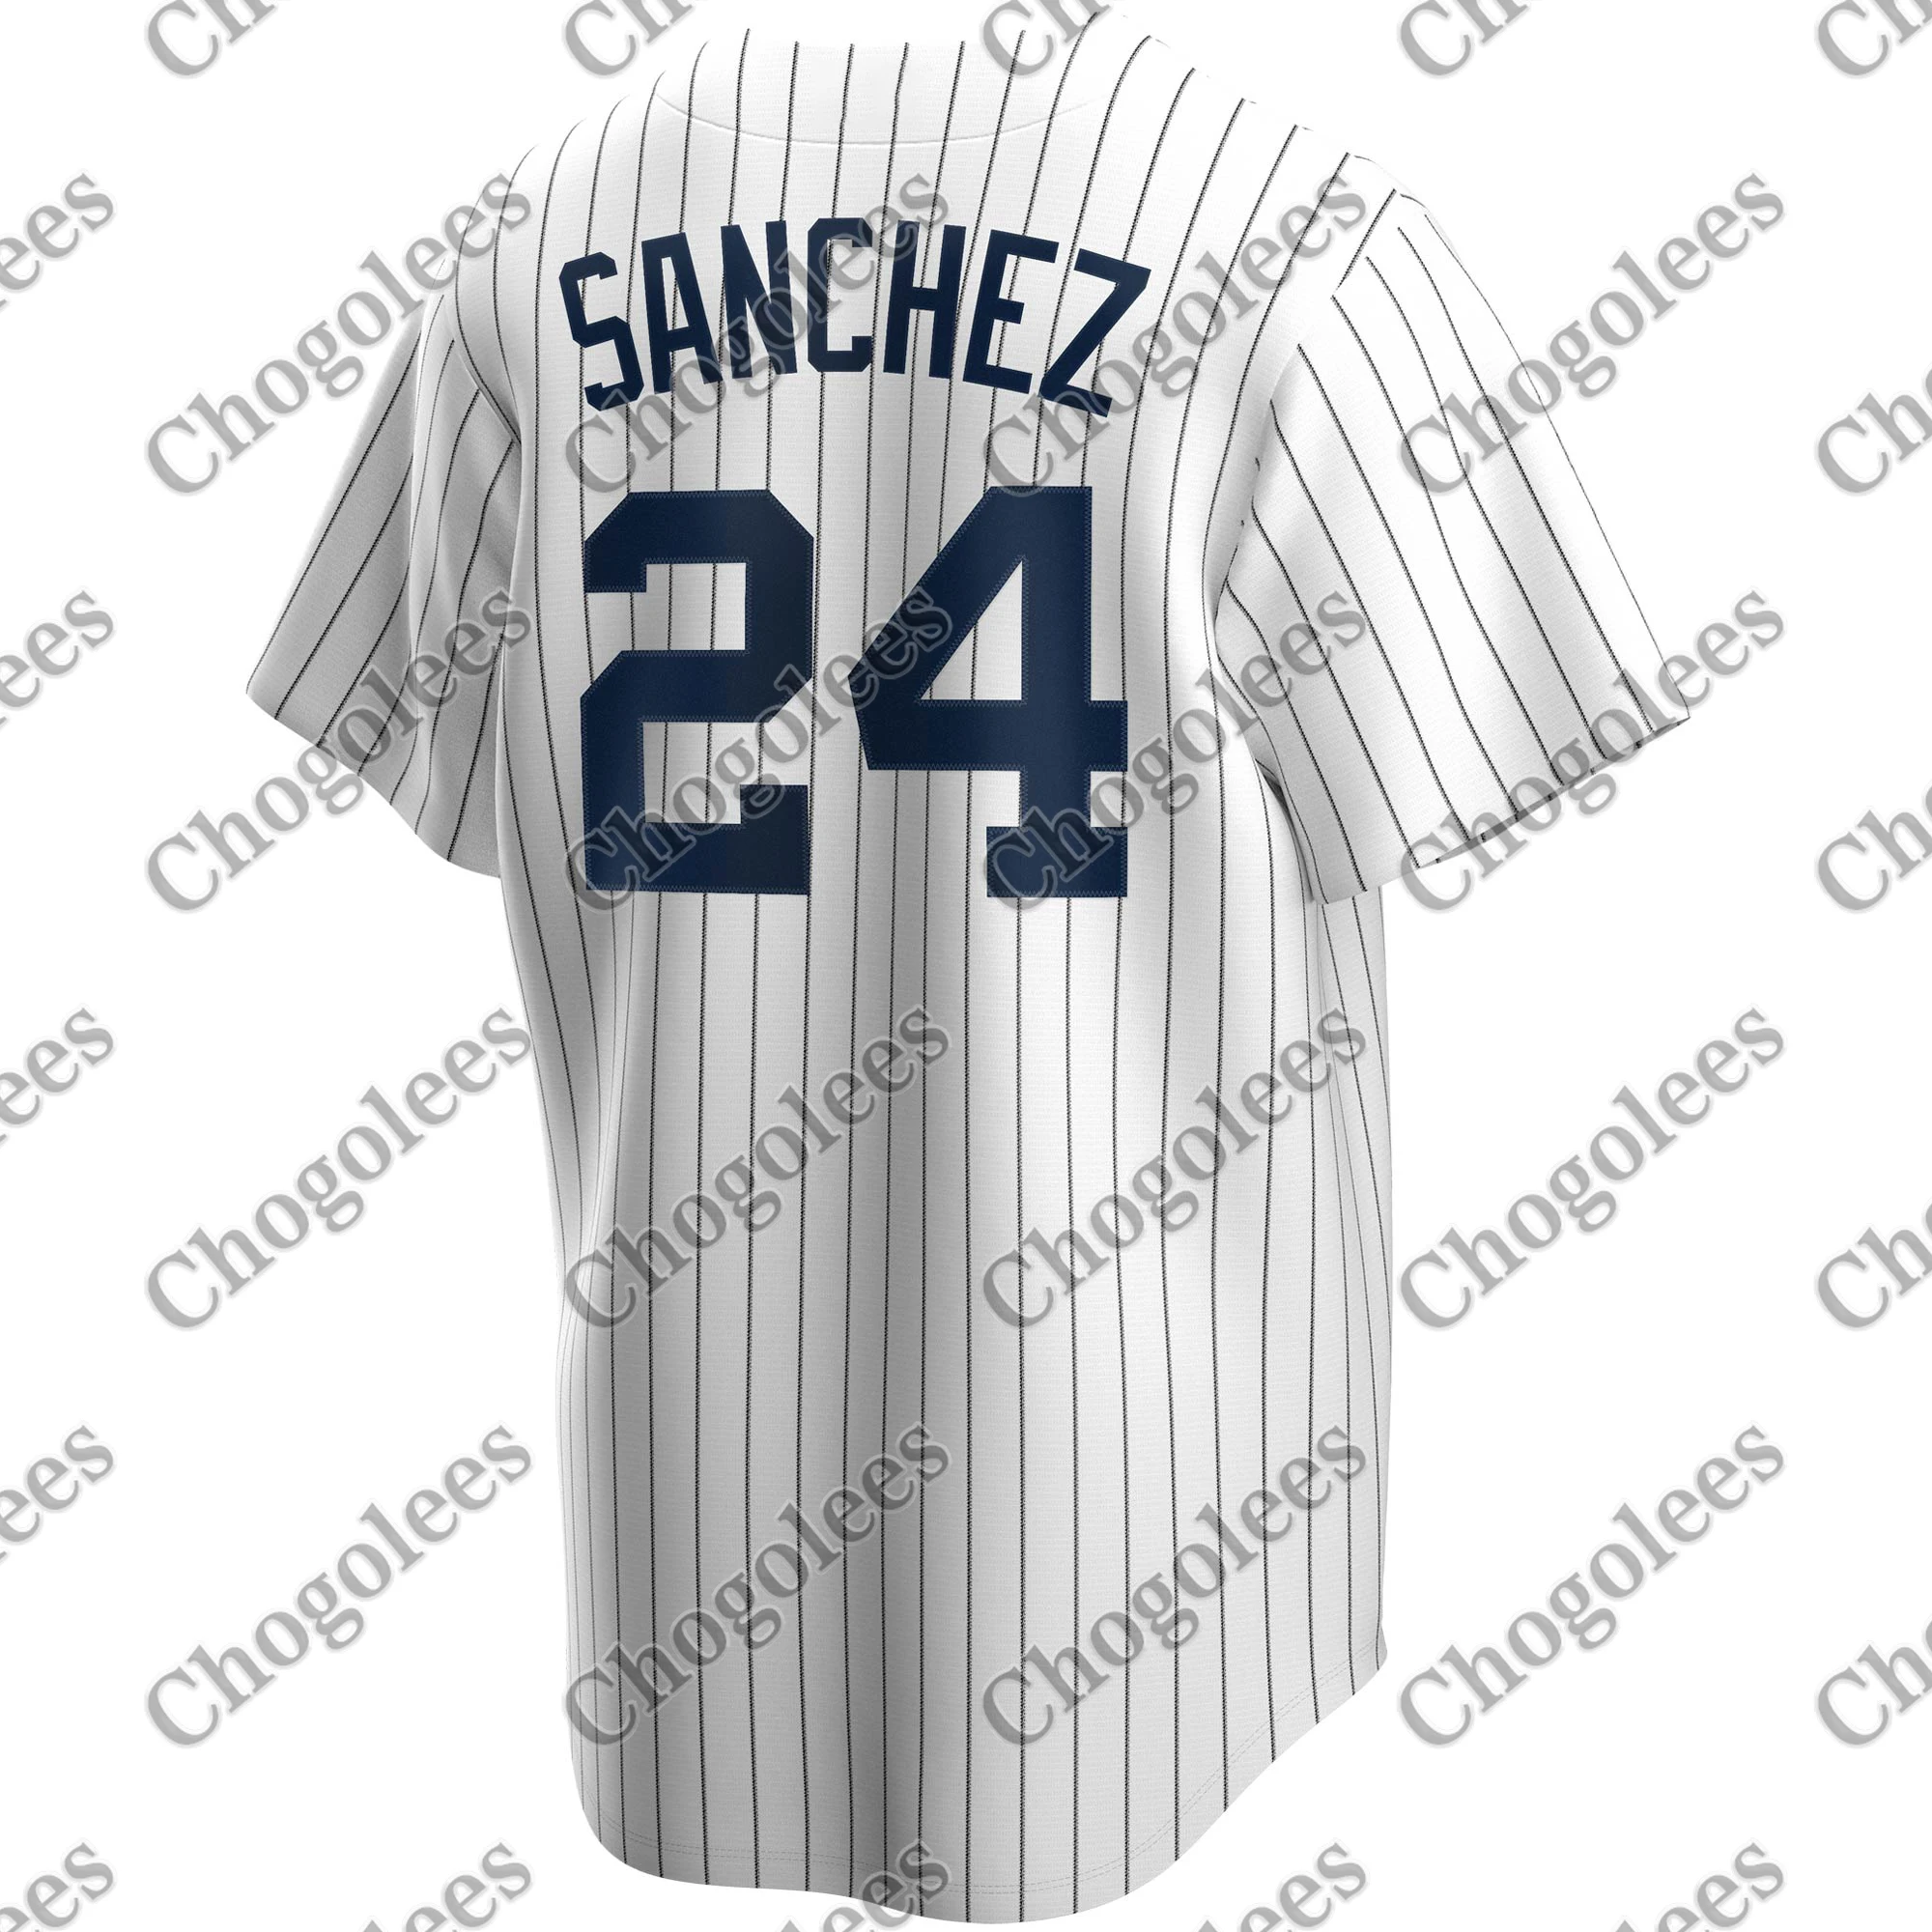 

Baseball Jersey Gary Sanchez New York Home 2020 Player Name Jersey